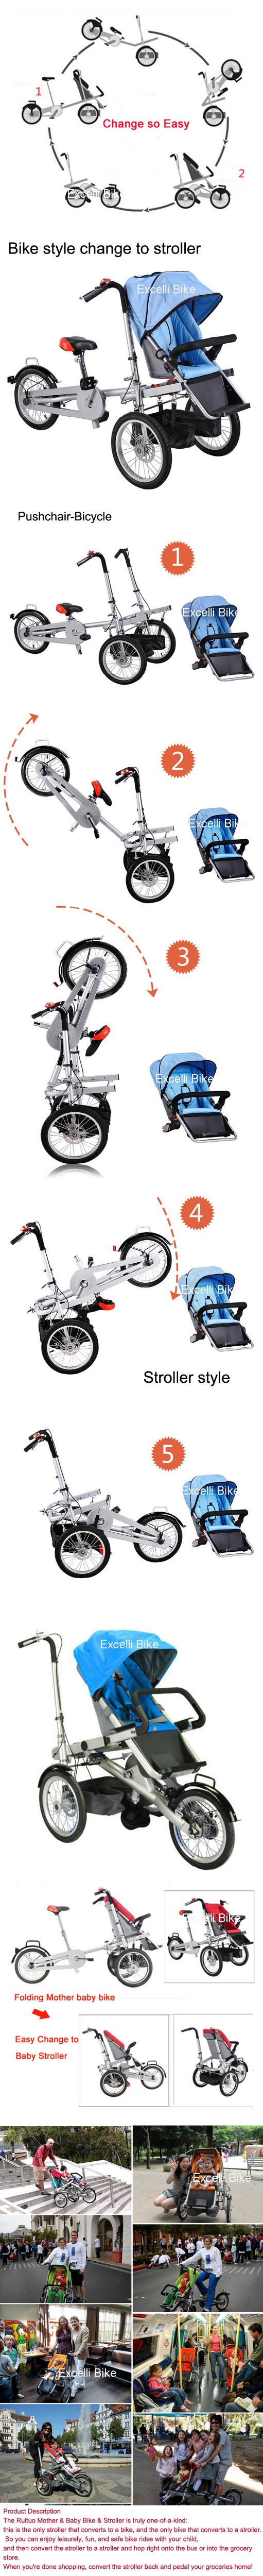 H02-adding logo-Taga Pushchair-Bicycle Folding Taga Bike 16inch Mother Baby Stroller Bike baby stroller 3 in 1 Convertible Stroller Carriage stroller